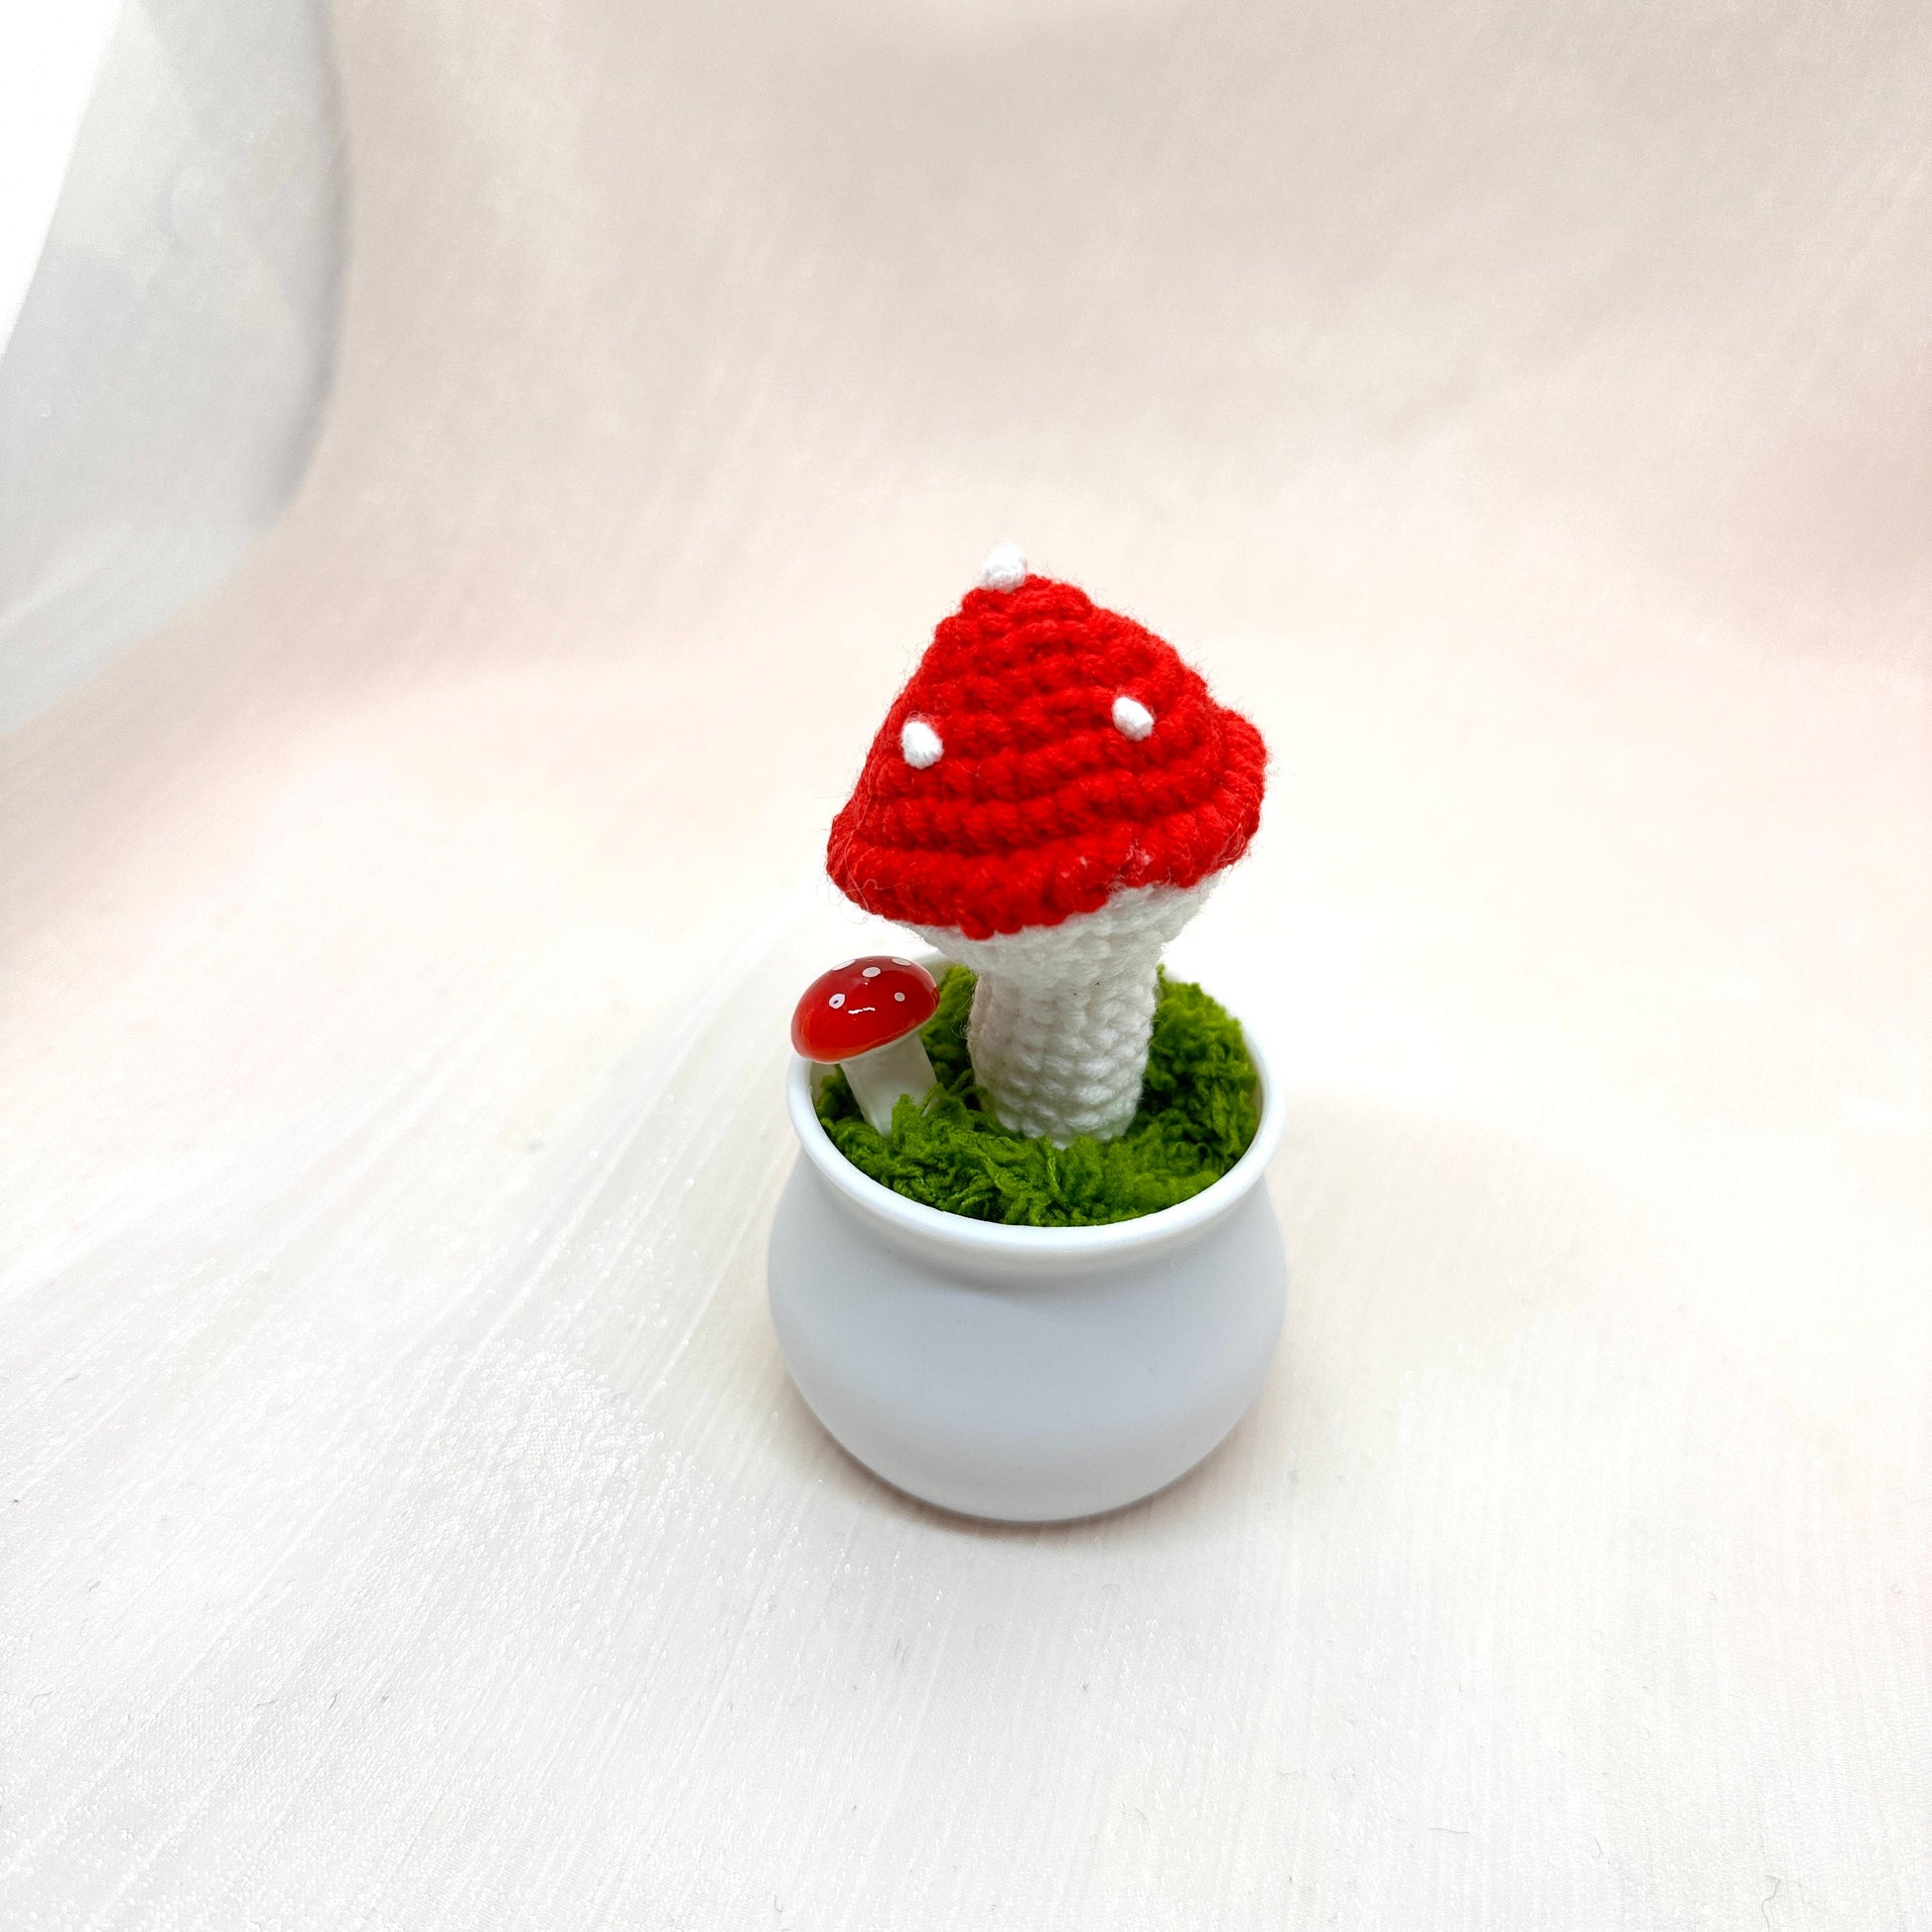 Crochet Mushroom Potted Plant, Handmade Knitted Plants, Gift Ideas, Decorative Flower, Car Decoration, Creative Gift Idea